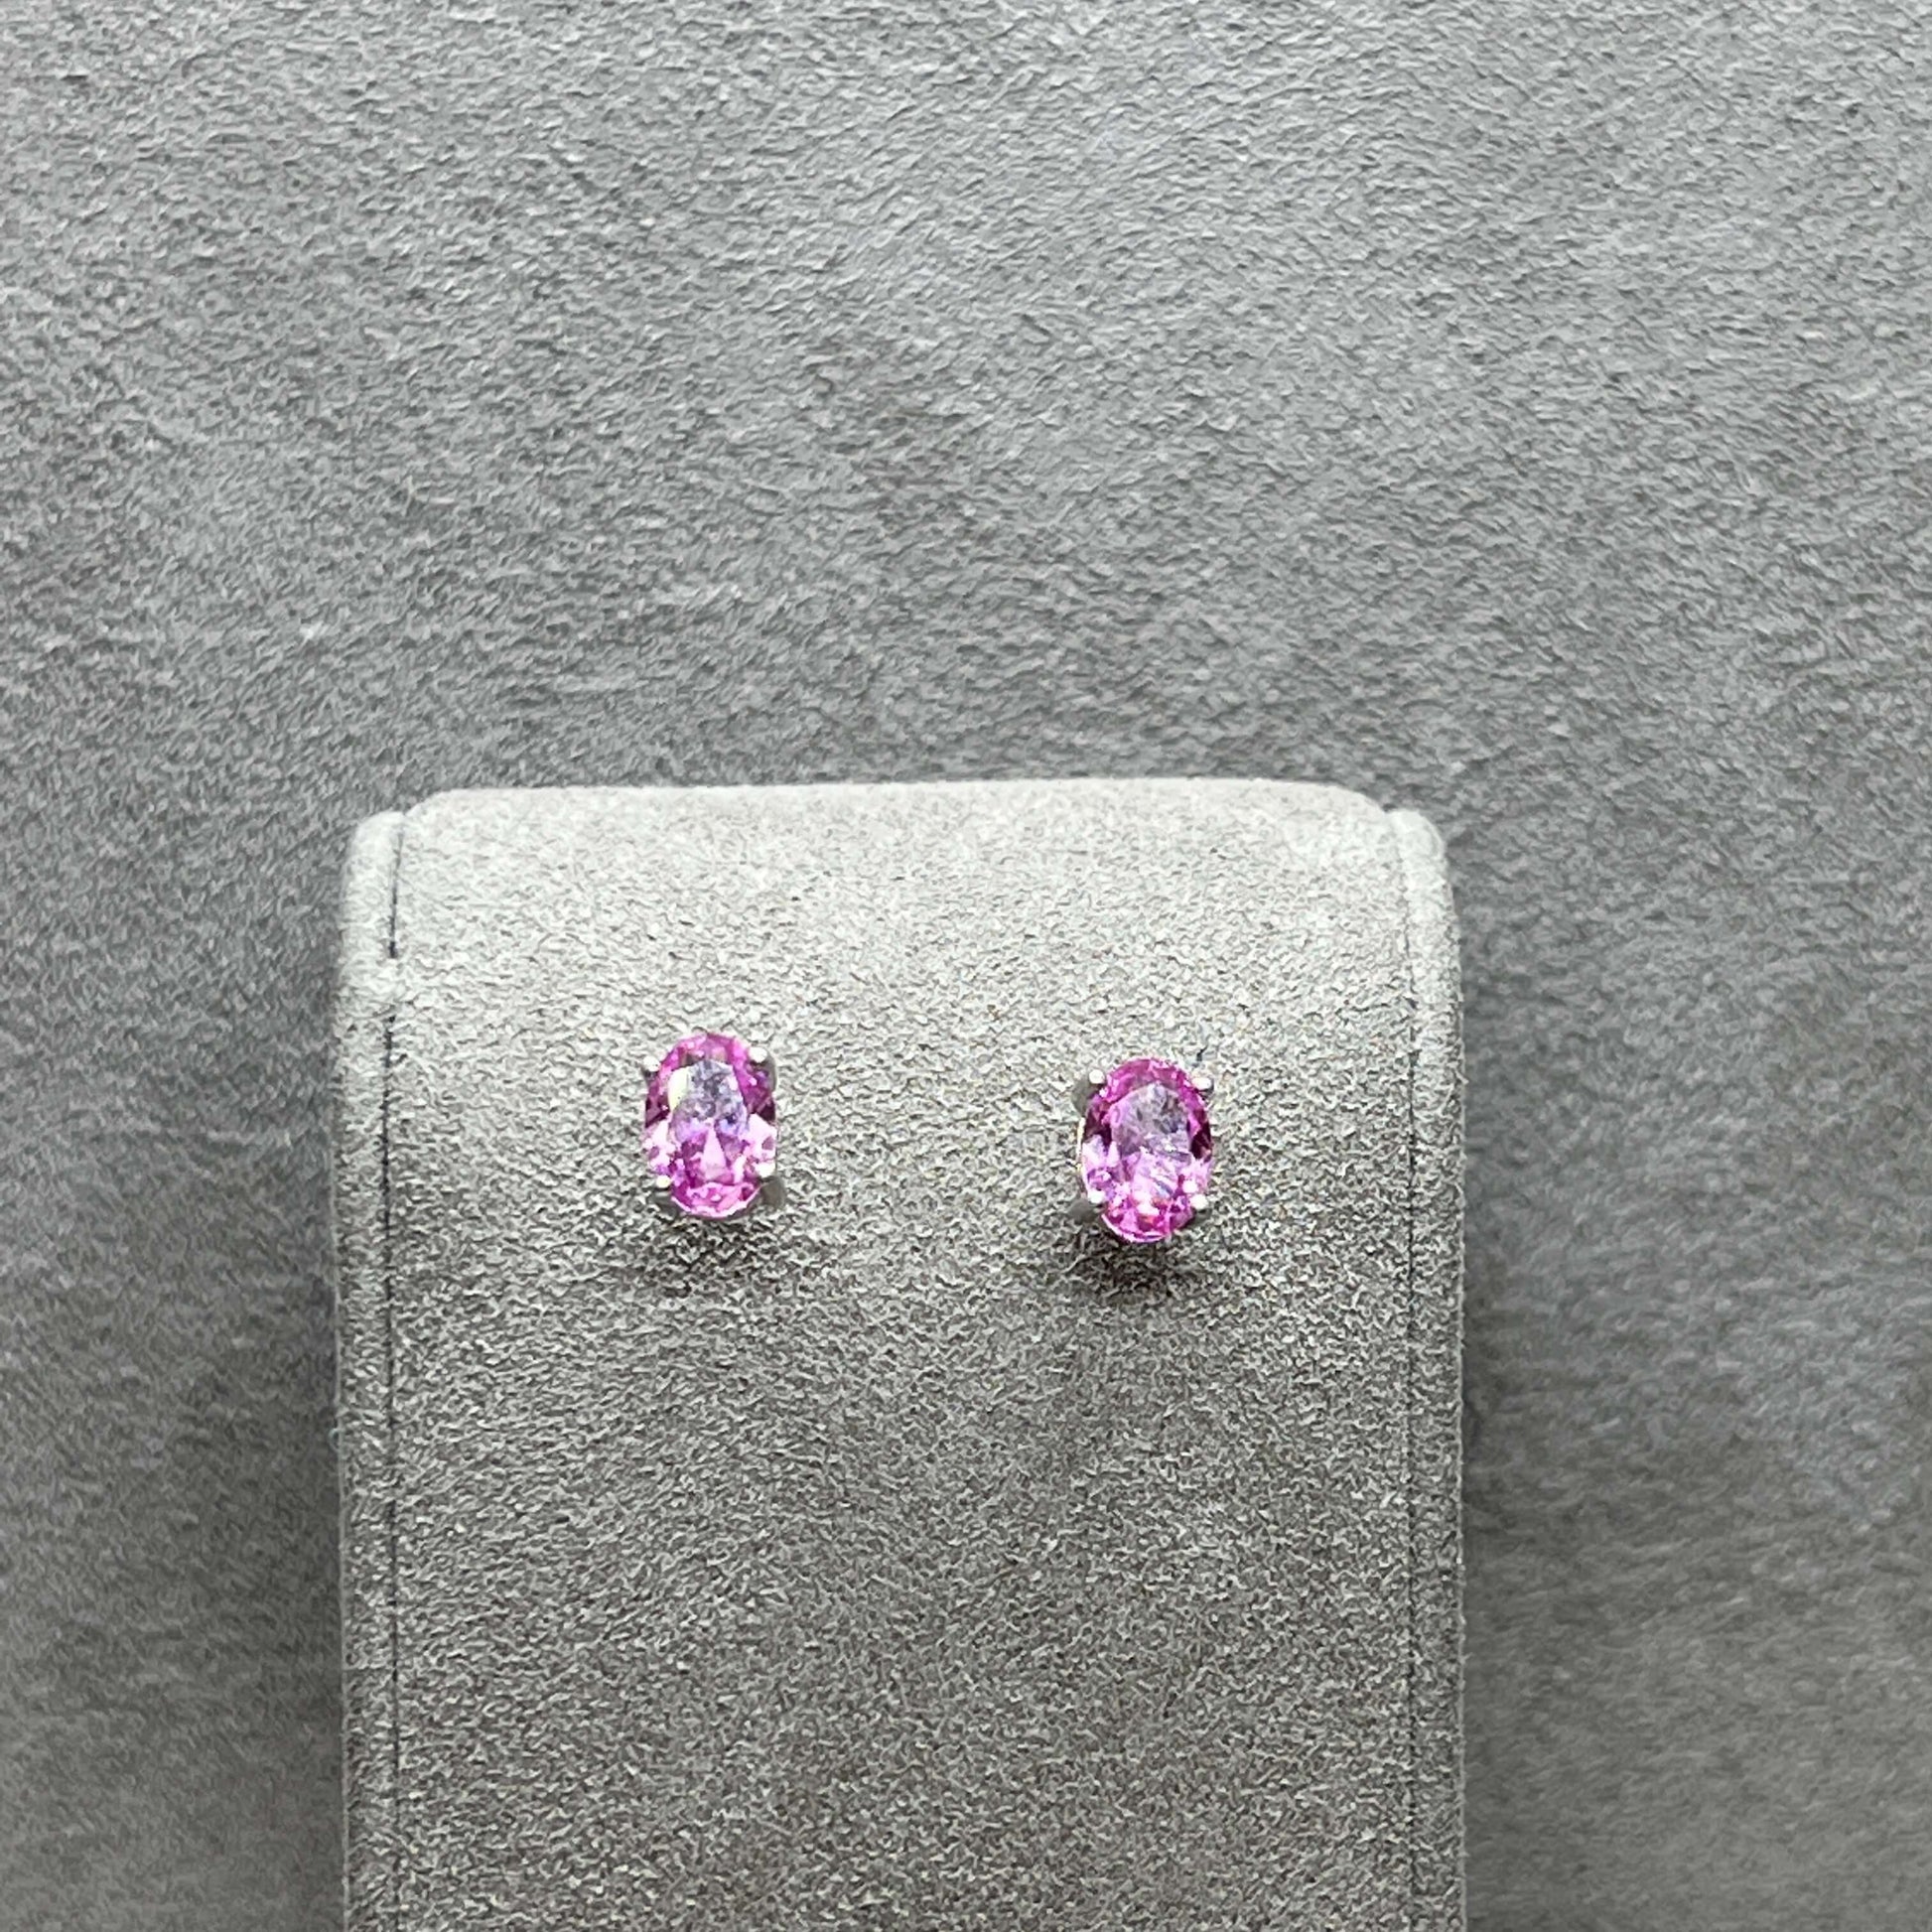 Oval Cut 6x4mm Pink Topaz Solitaire Stud Earrings - Twelve Silver Trees